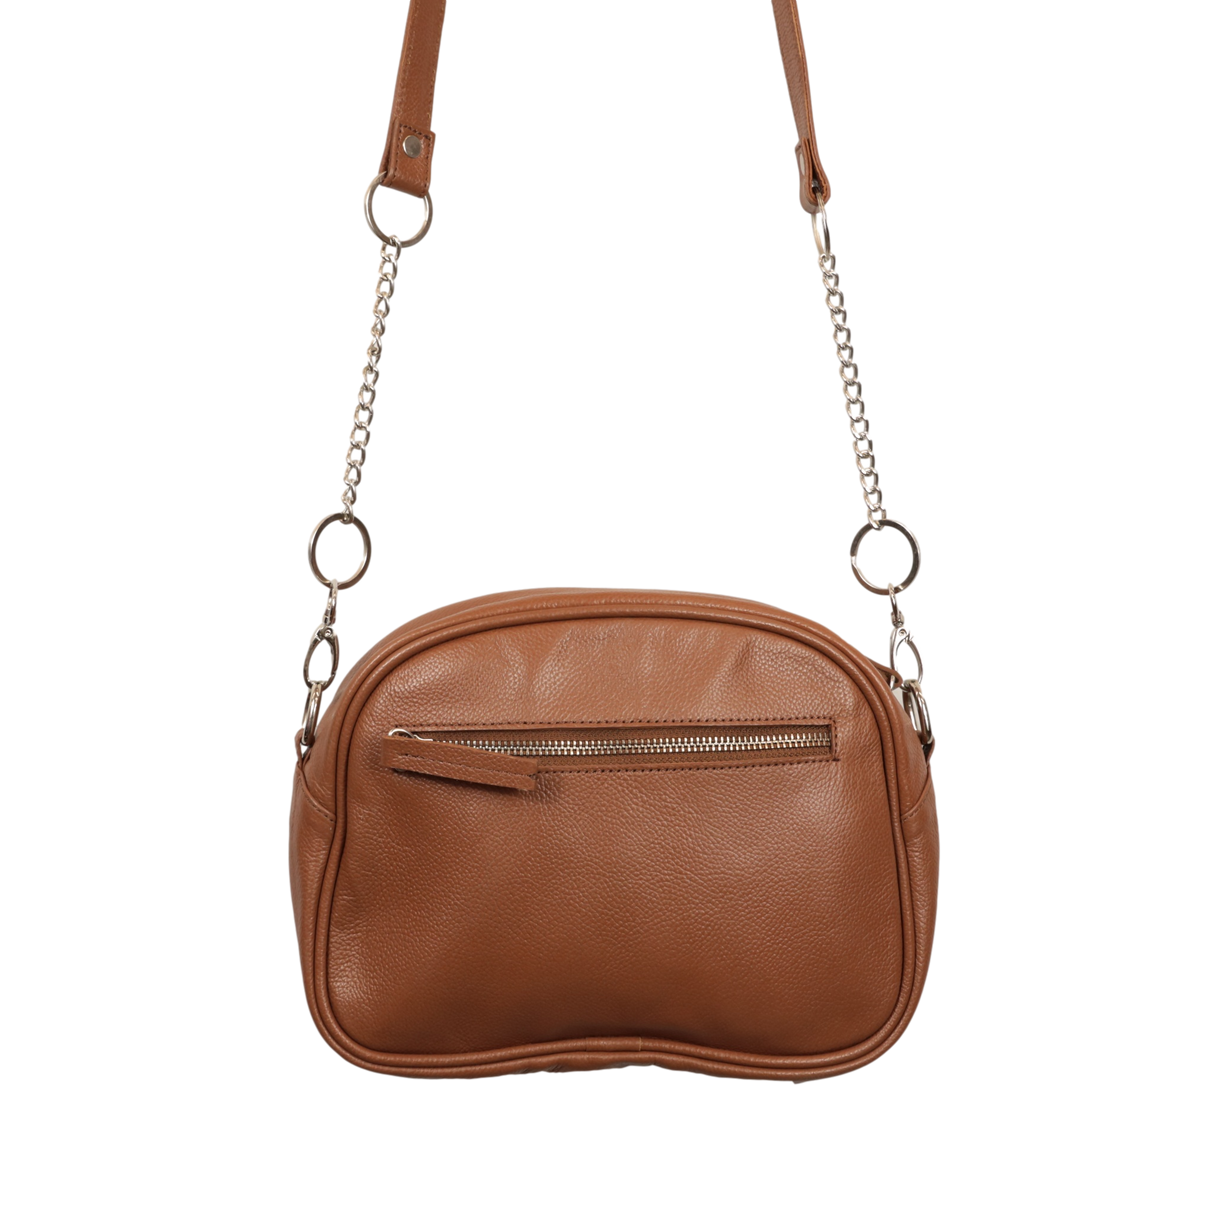 Stella Cowhide Leather Handbag - 061